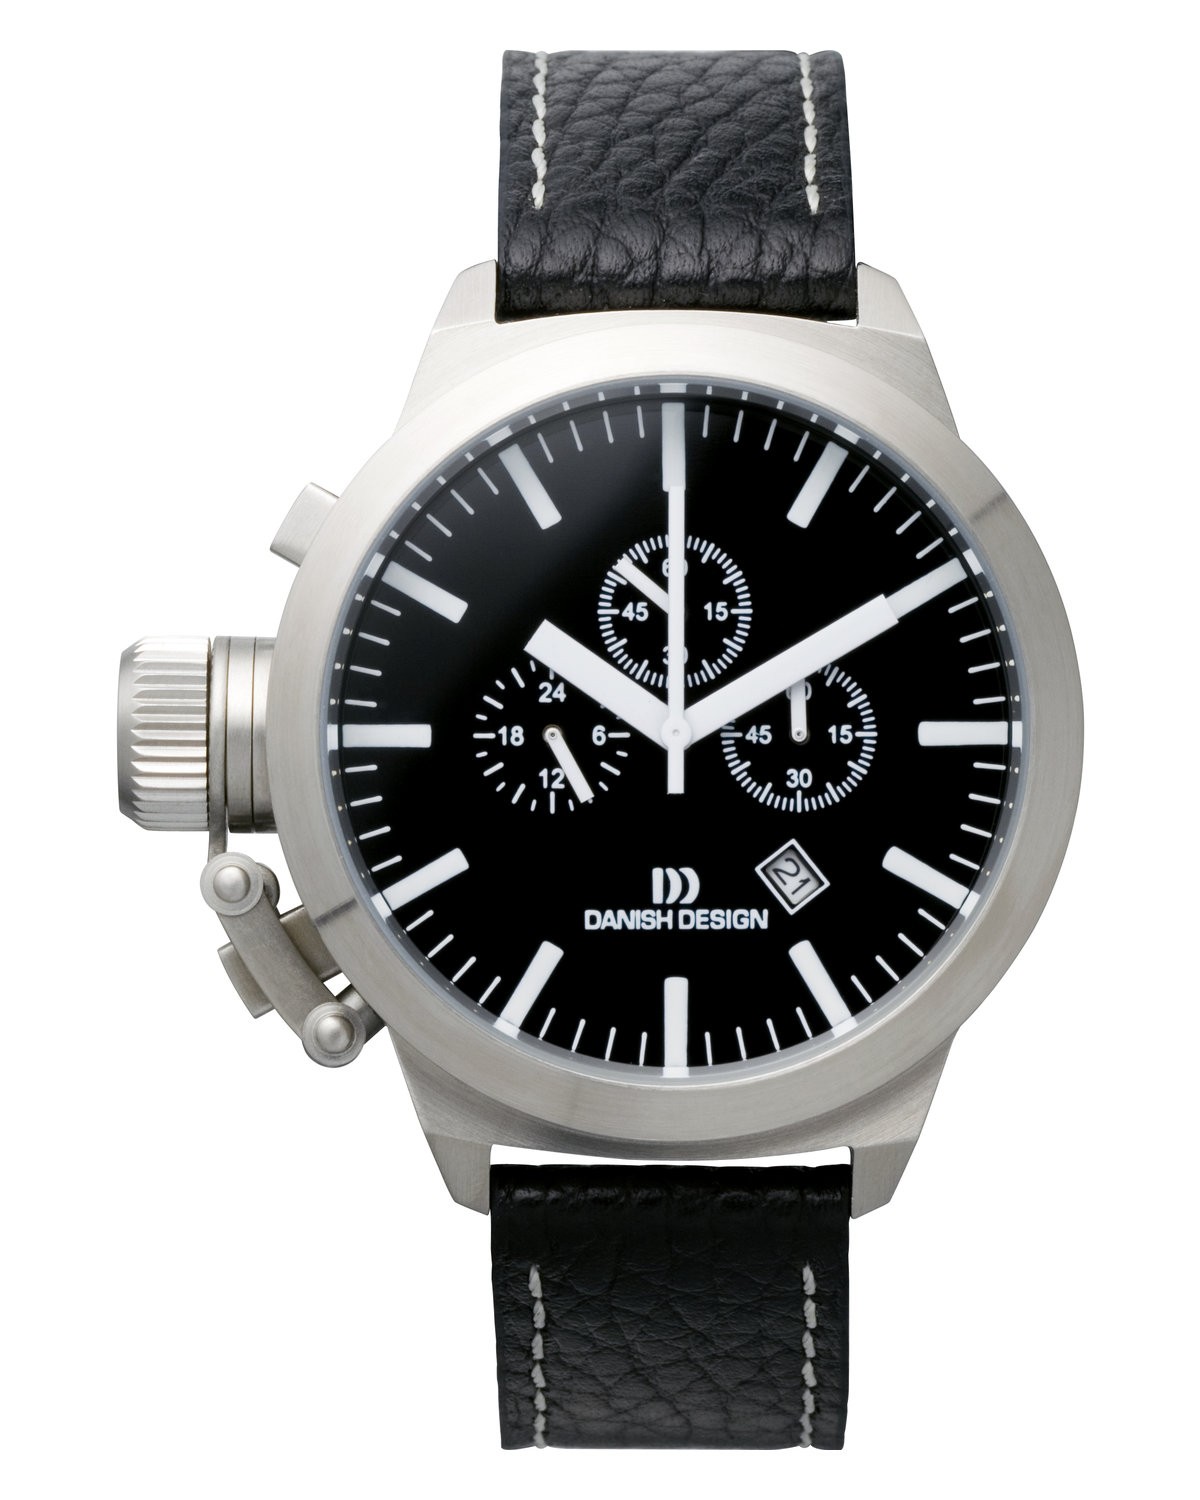 Danish Design watches catalogue 2016 by MSS Watch Company - Issuu